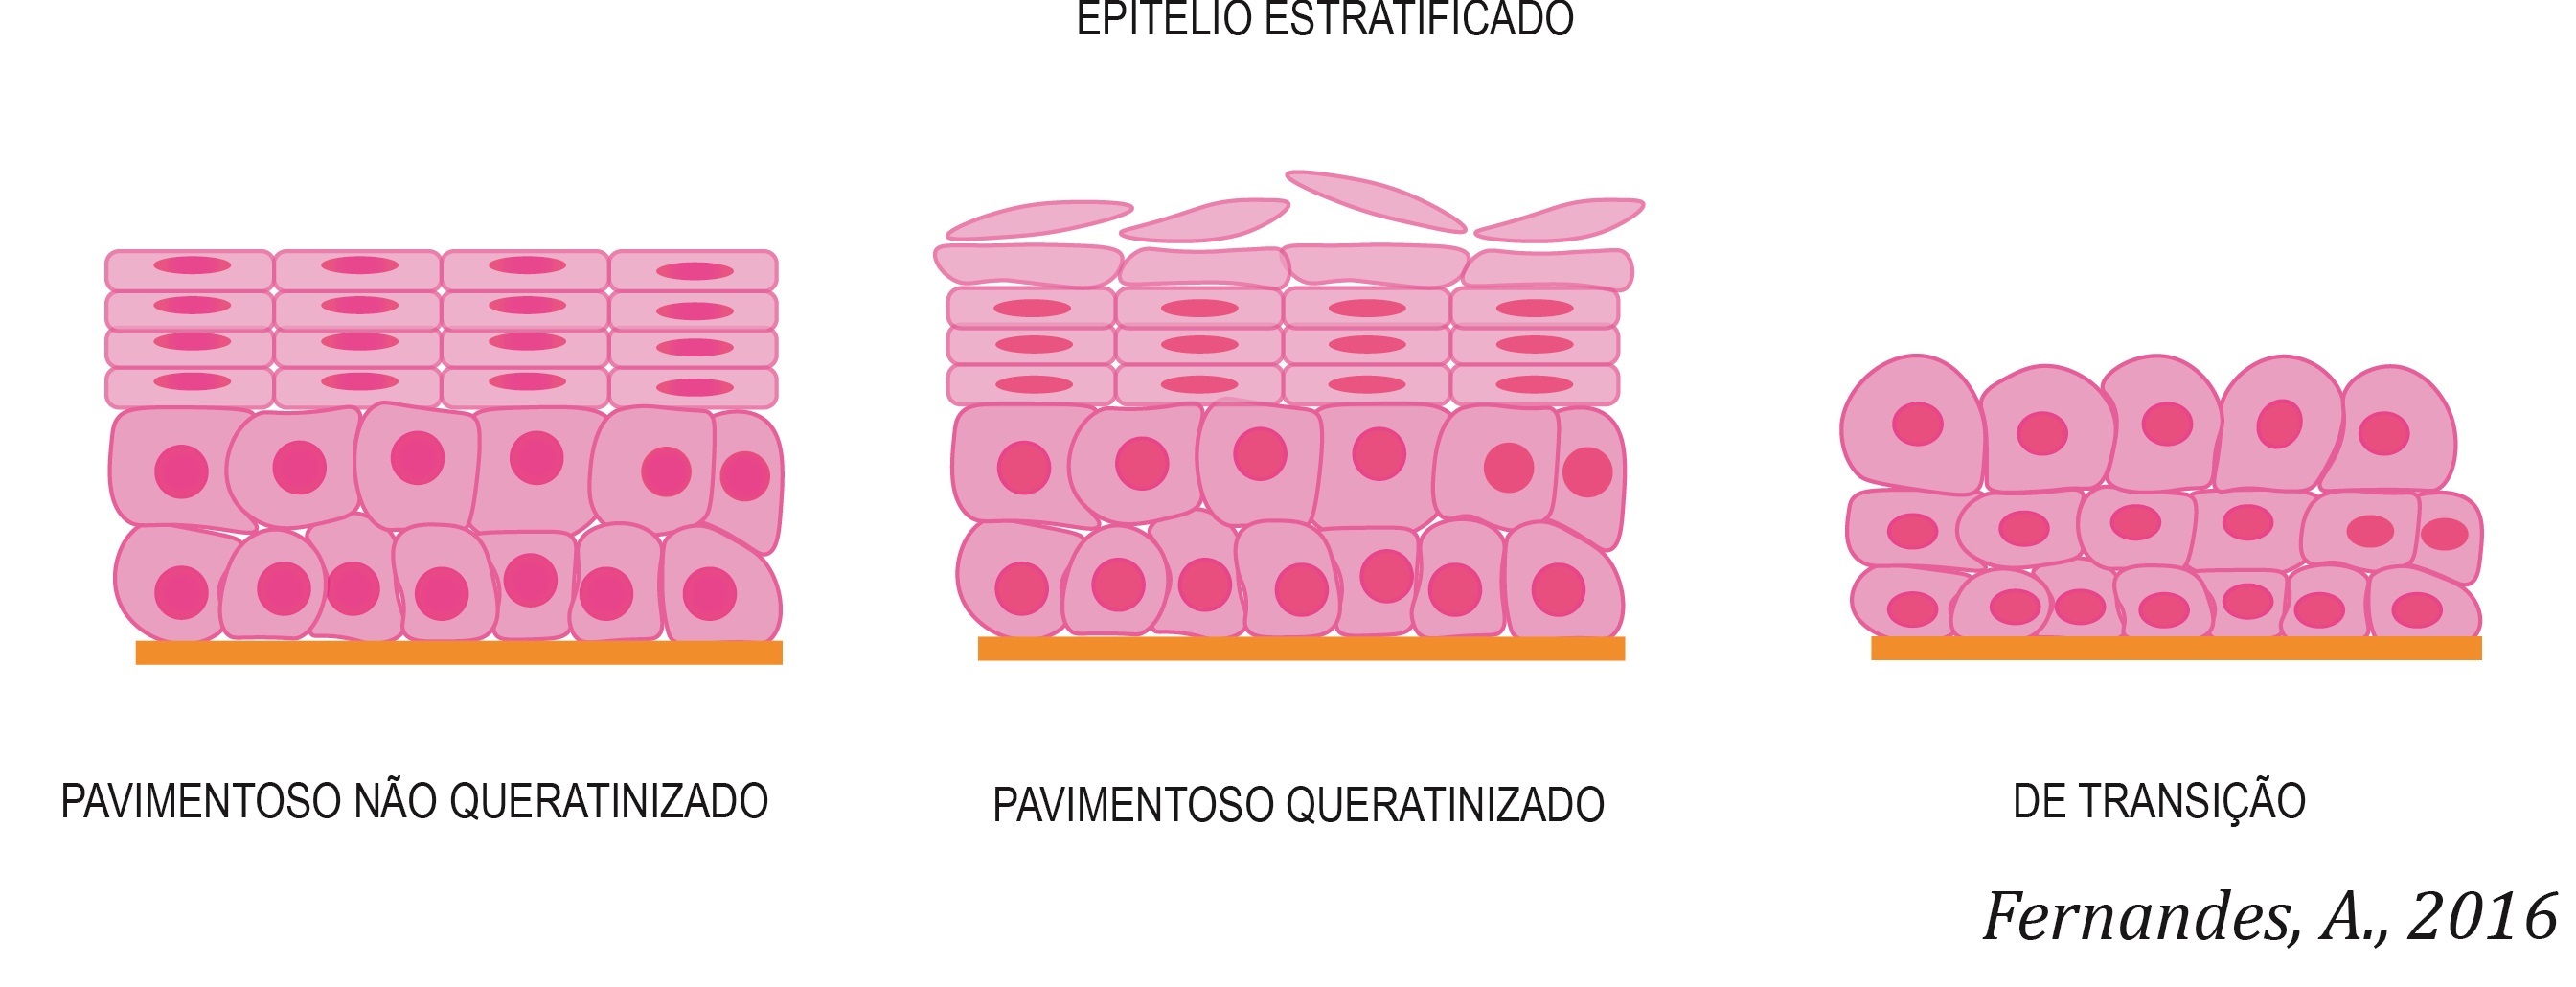 epitelio-estratificado-pt